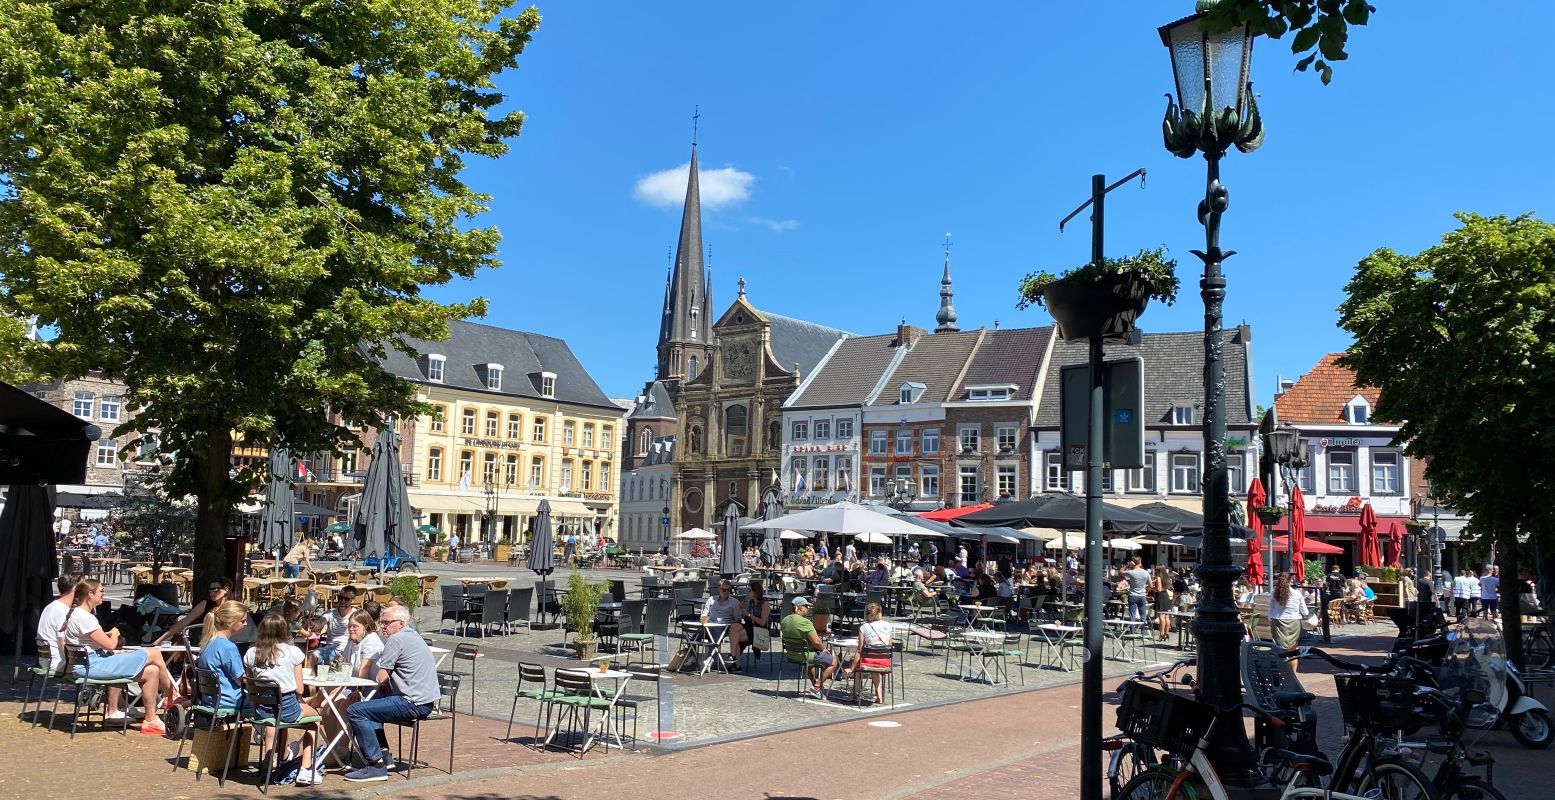 De Markt in het bourgondische Sittard. Foto: © Visit Zuid-Limburg